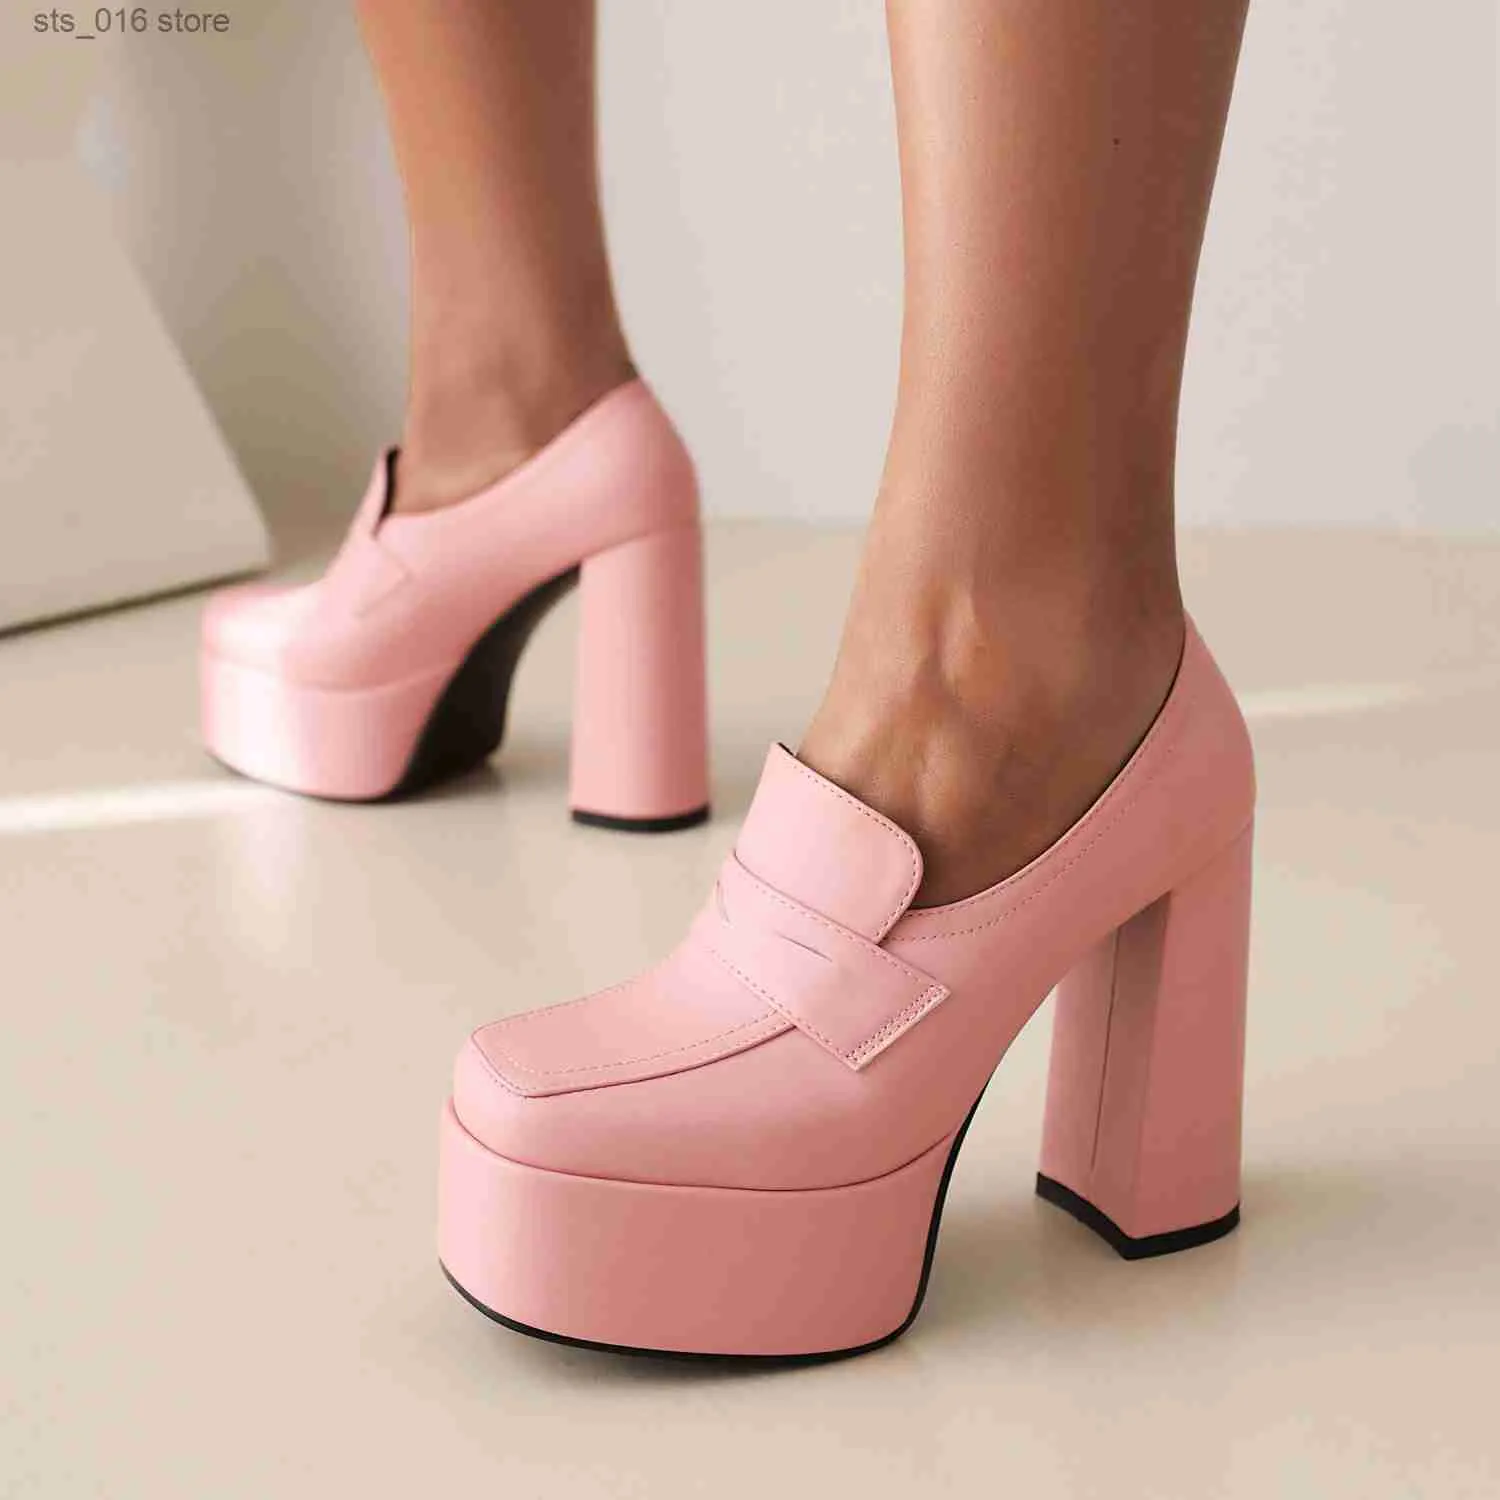 Fashion Dress Autumn Pink Platform High Women Pumps White Soft Leather Square Toe Thick Heels Party Woman Office Shoes Plus Size 34-43 T230829 679